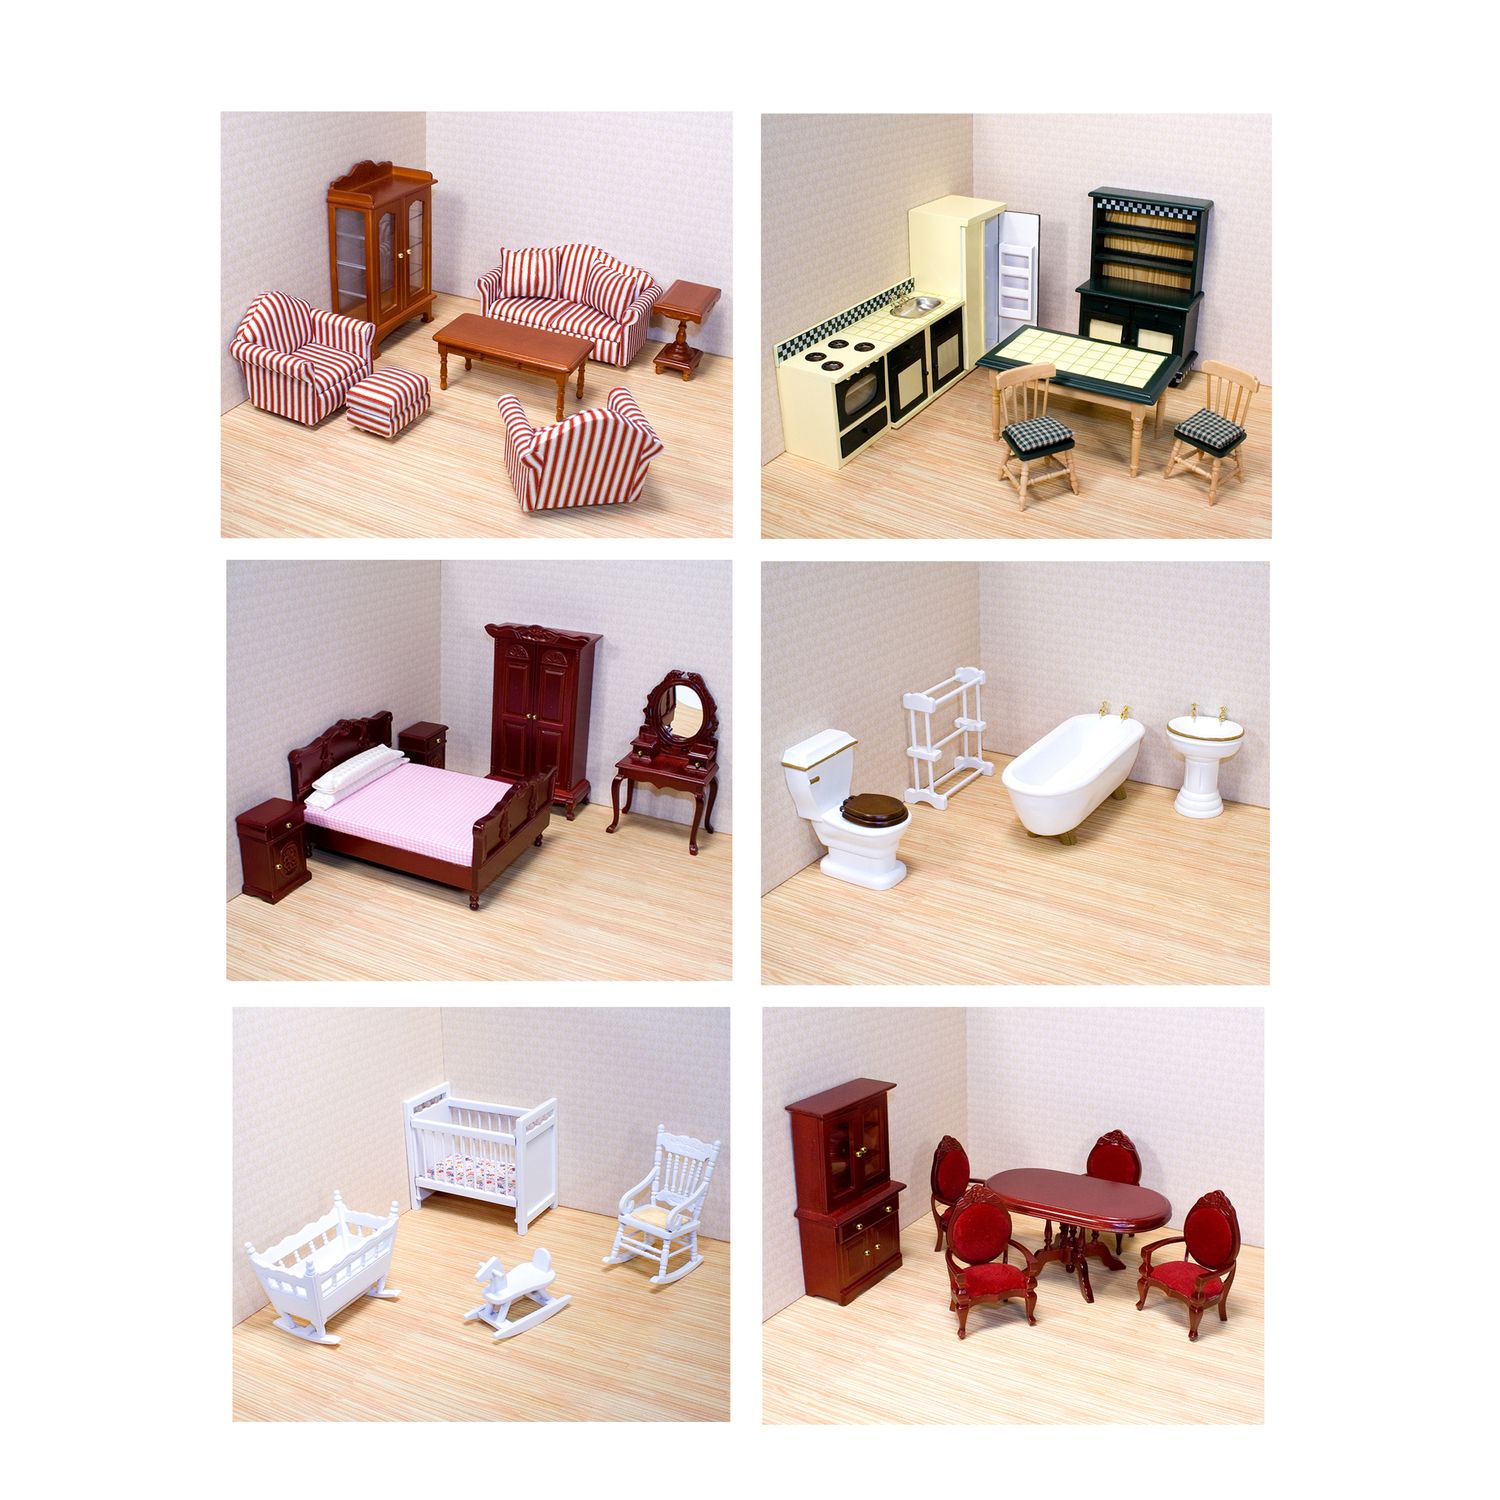 melissa and doug victorian dollhouse furniture